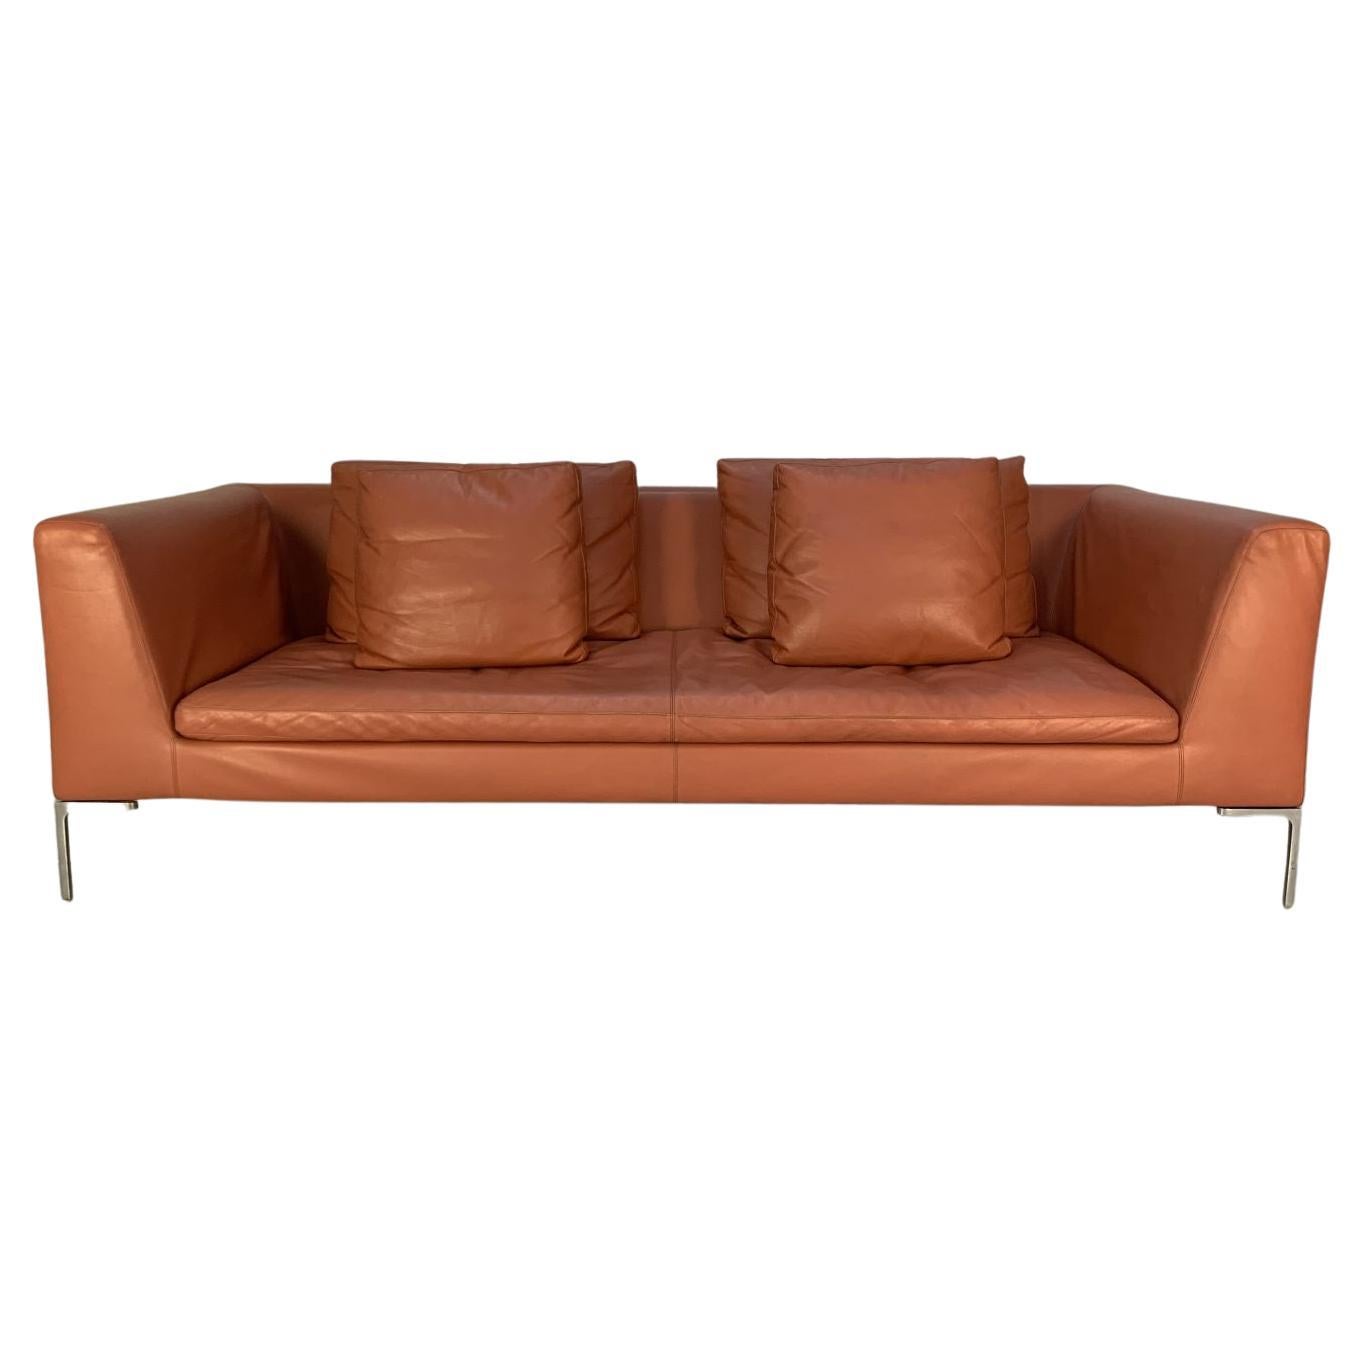 B&B Italia “Charles” Sofa – “CH230” 3-Seat – In Dark Pink “Gamma” Leather For Sale